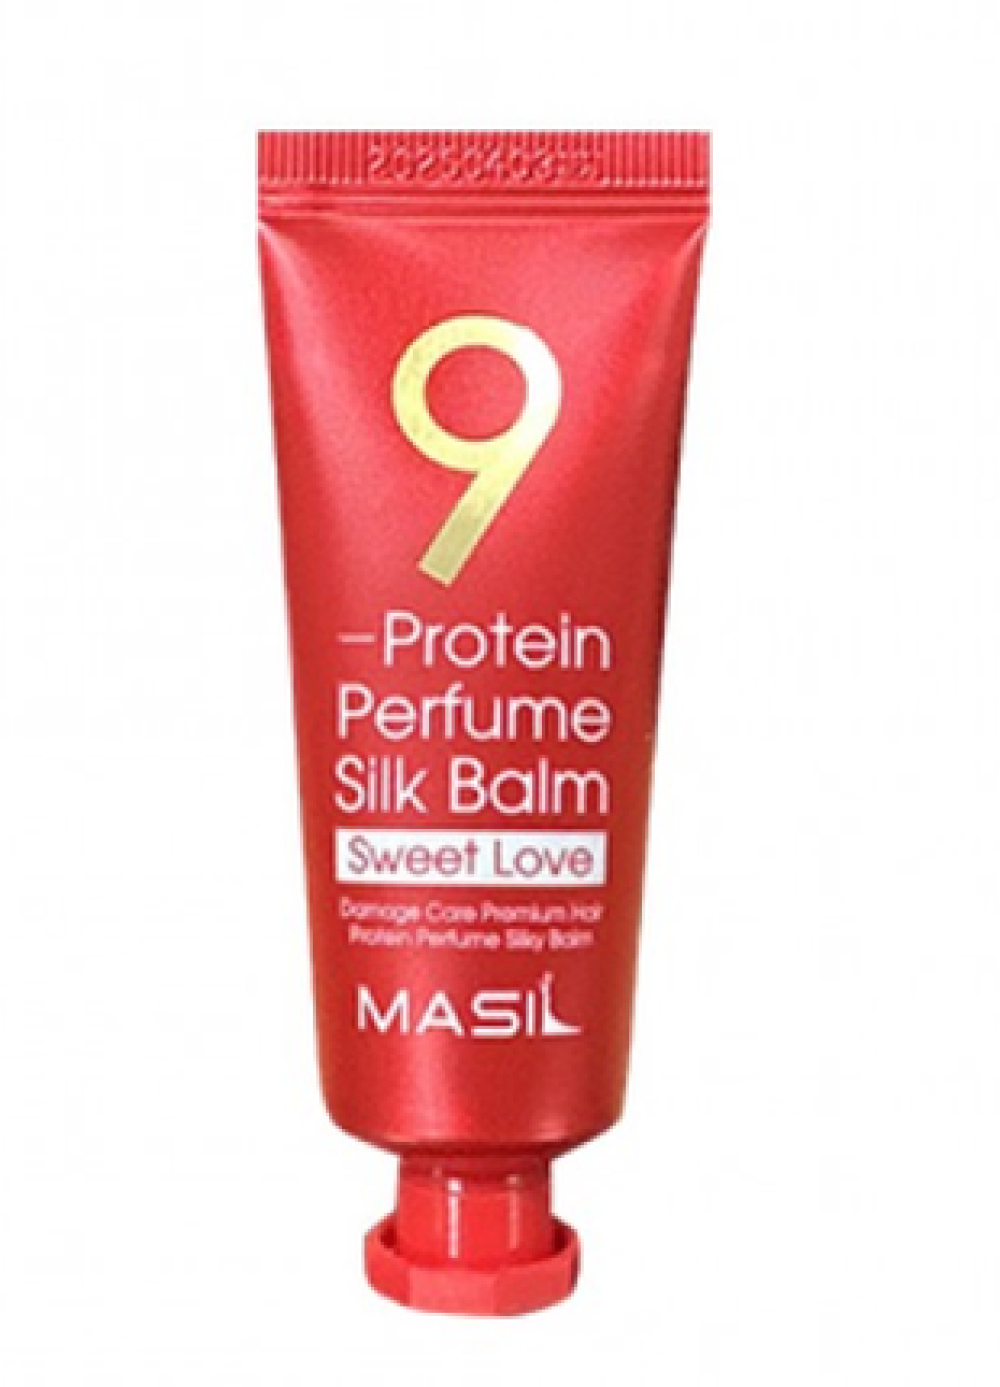 Несмываемый протеиновый бальзам для волос Masil 9 Protein Perfume Silk Balm Sweet Love, 20 мл